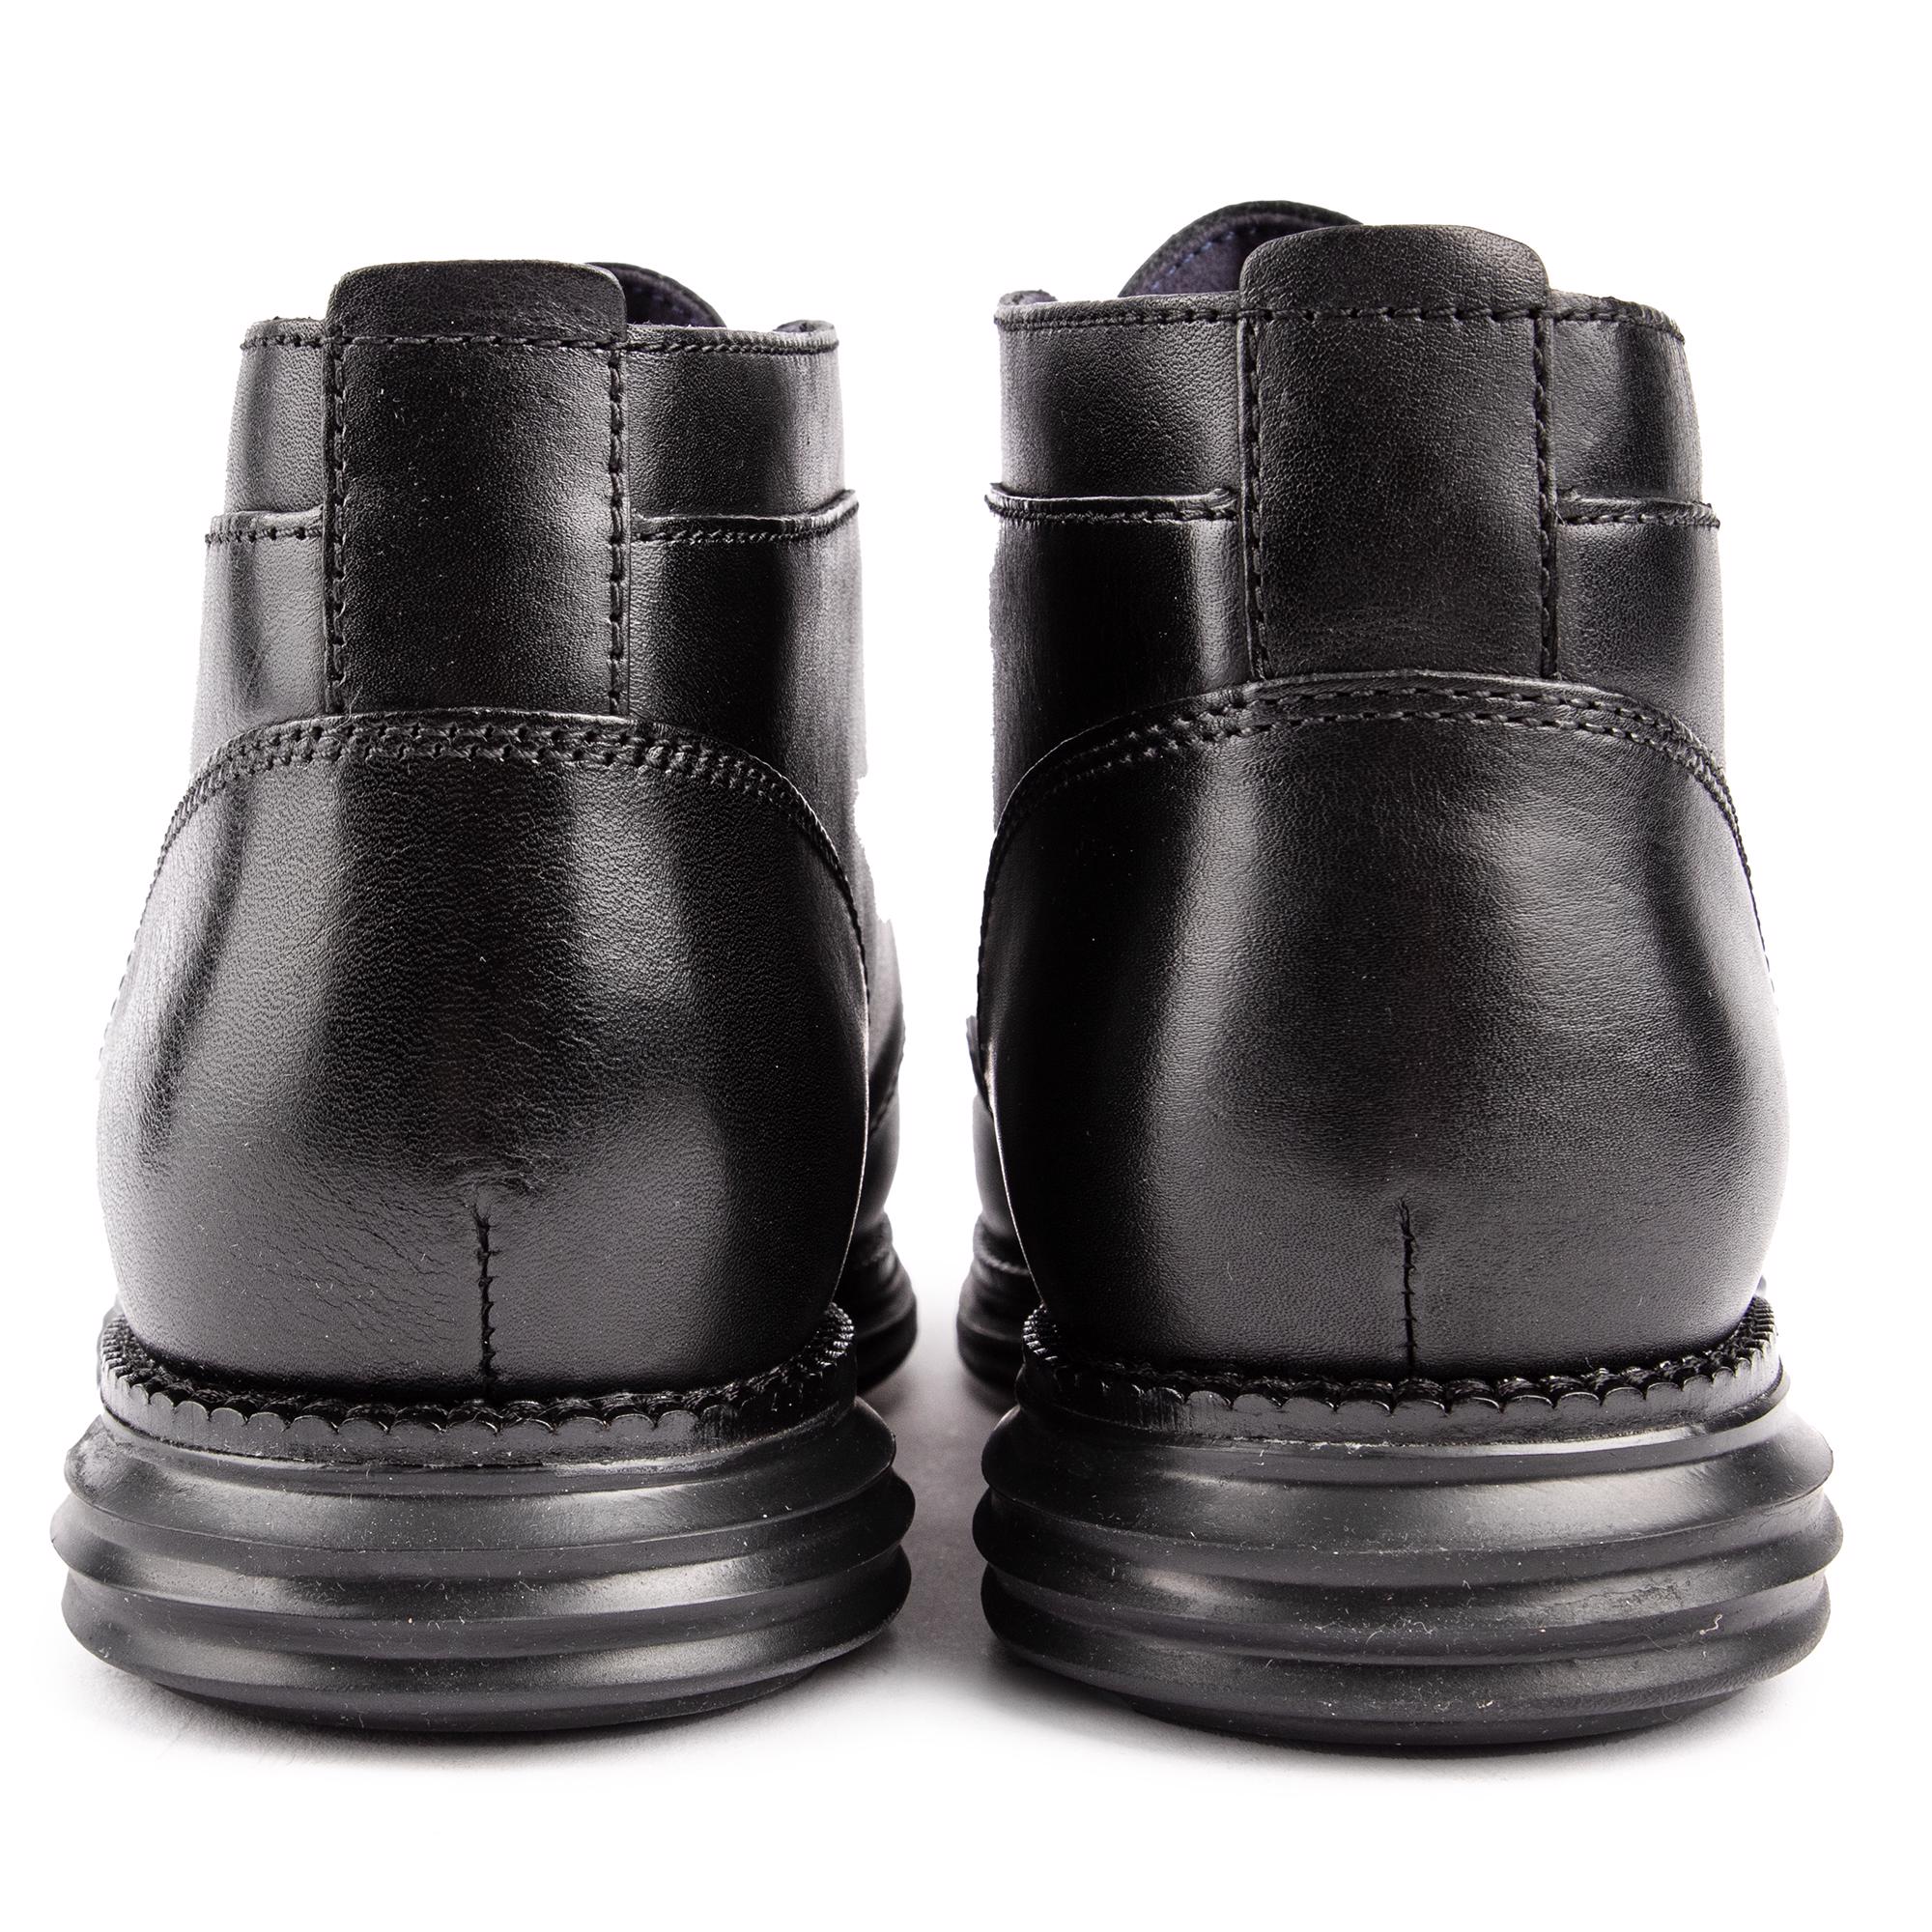 COLE HAAN Mens Original Grand Chukka Boots Black